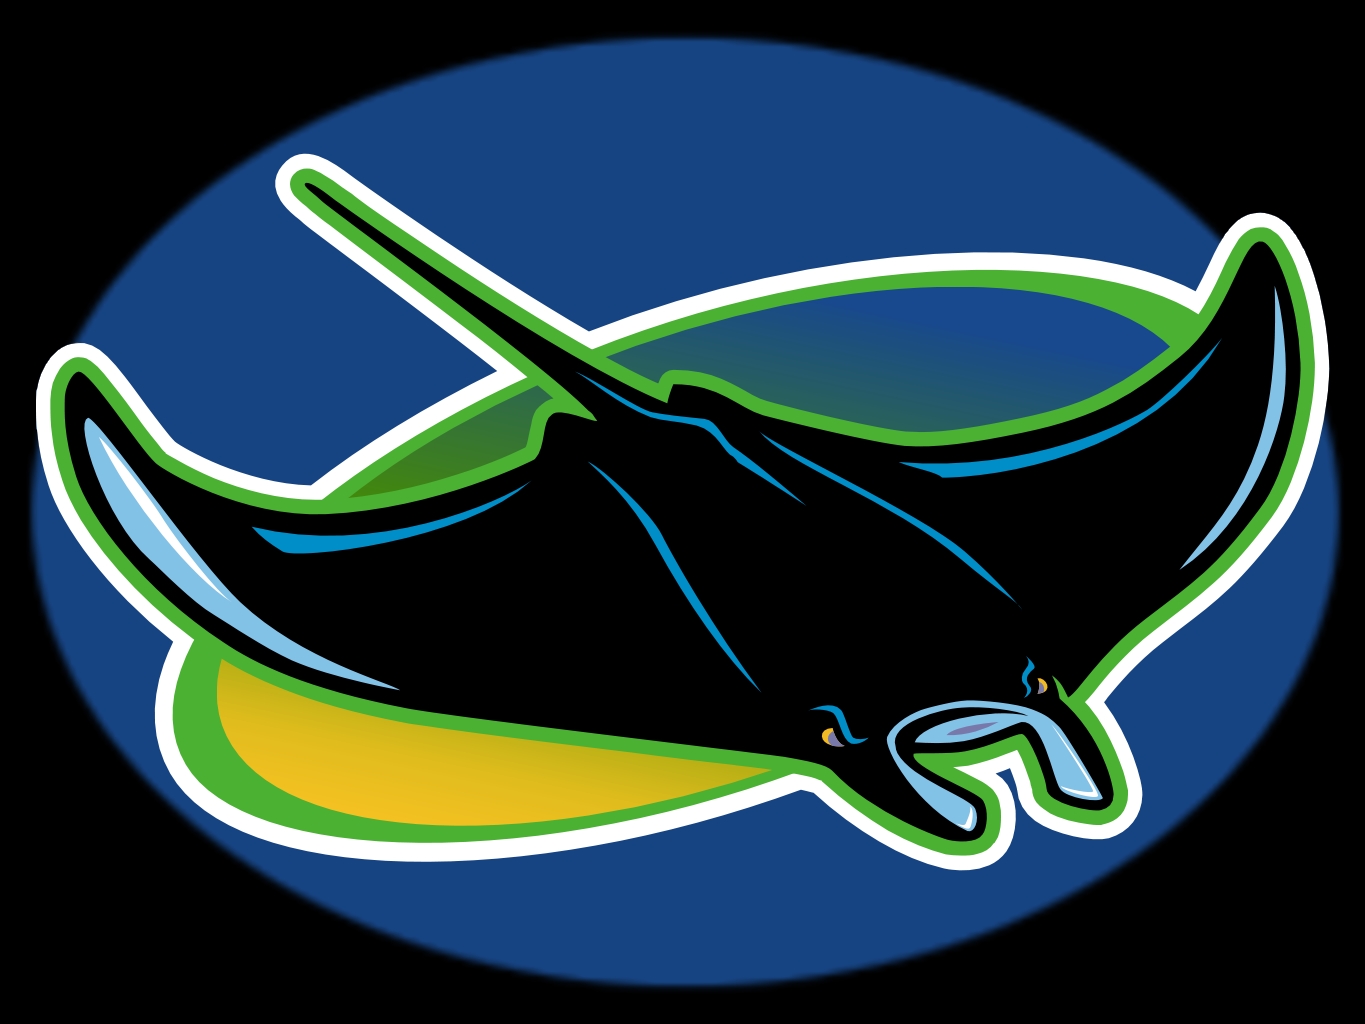 Tampa Bay Rays Logo Wallpaper